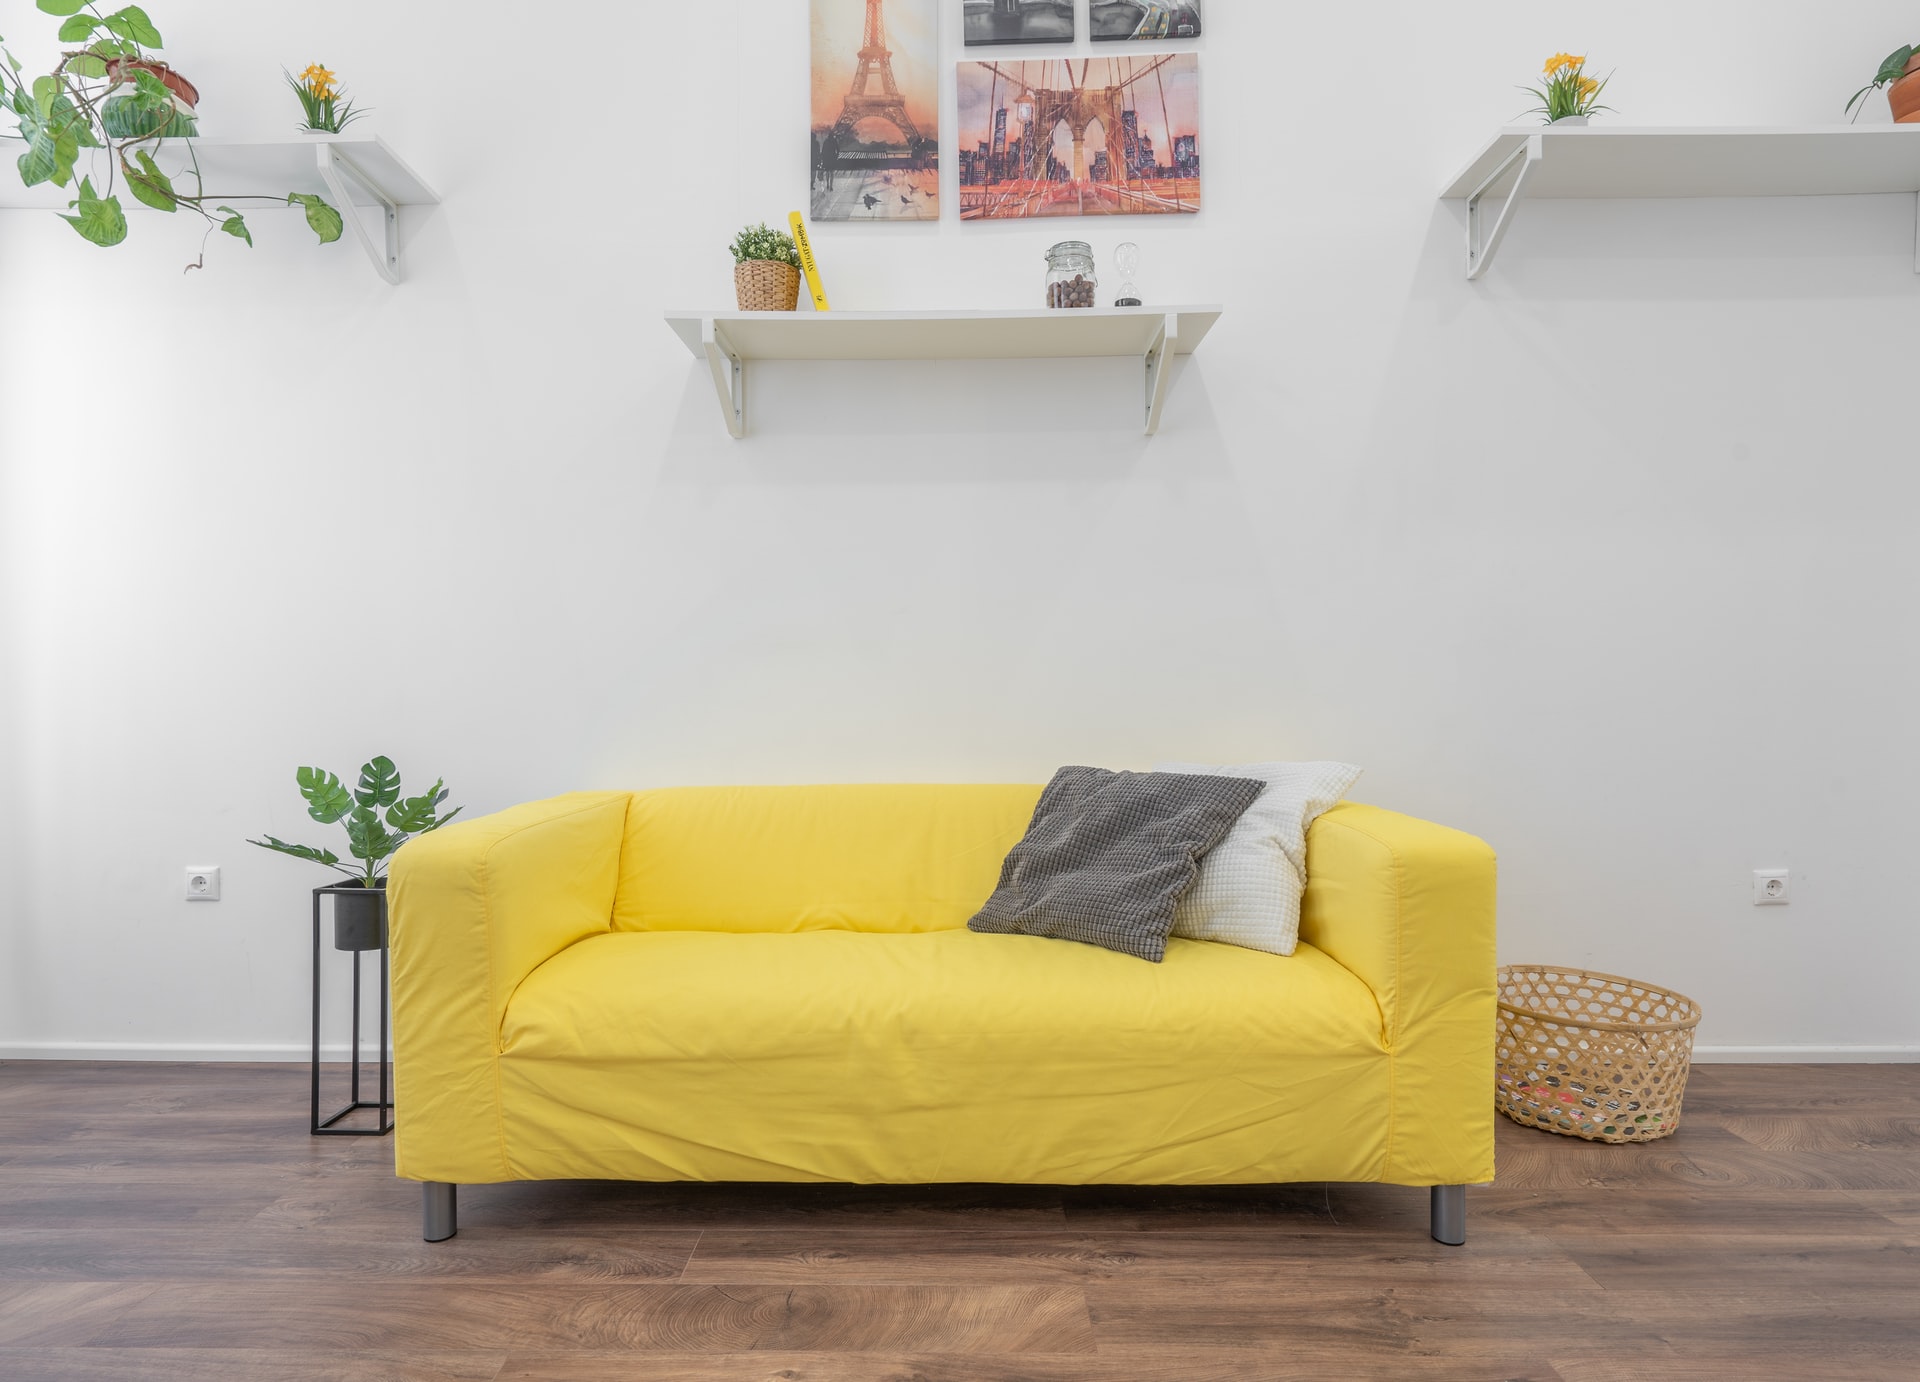 A yellow sofa inside a summer living room